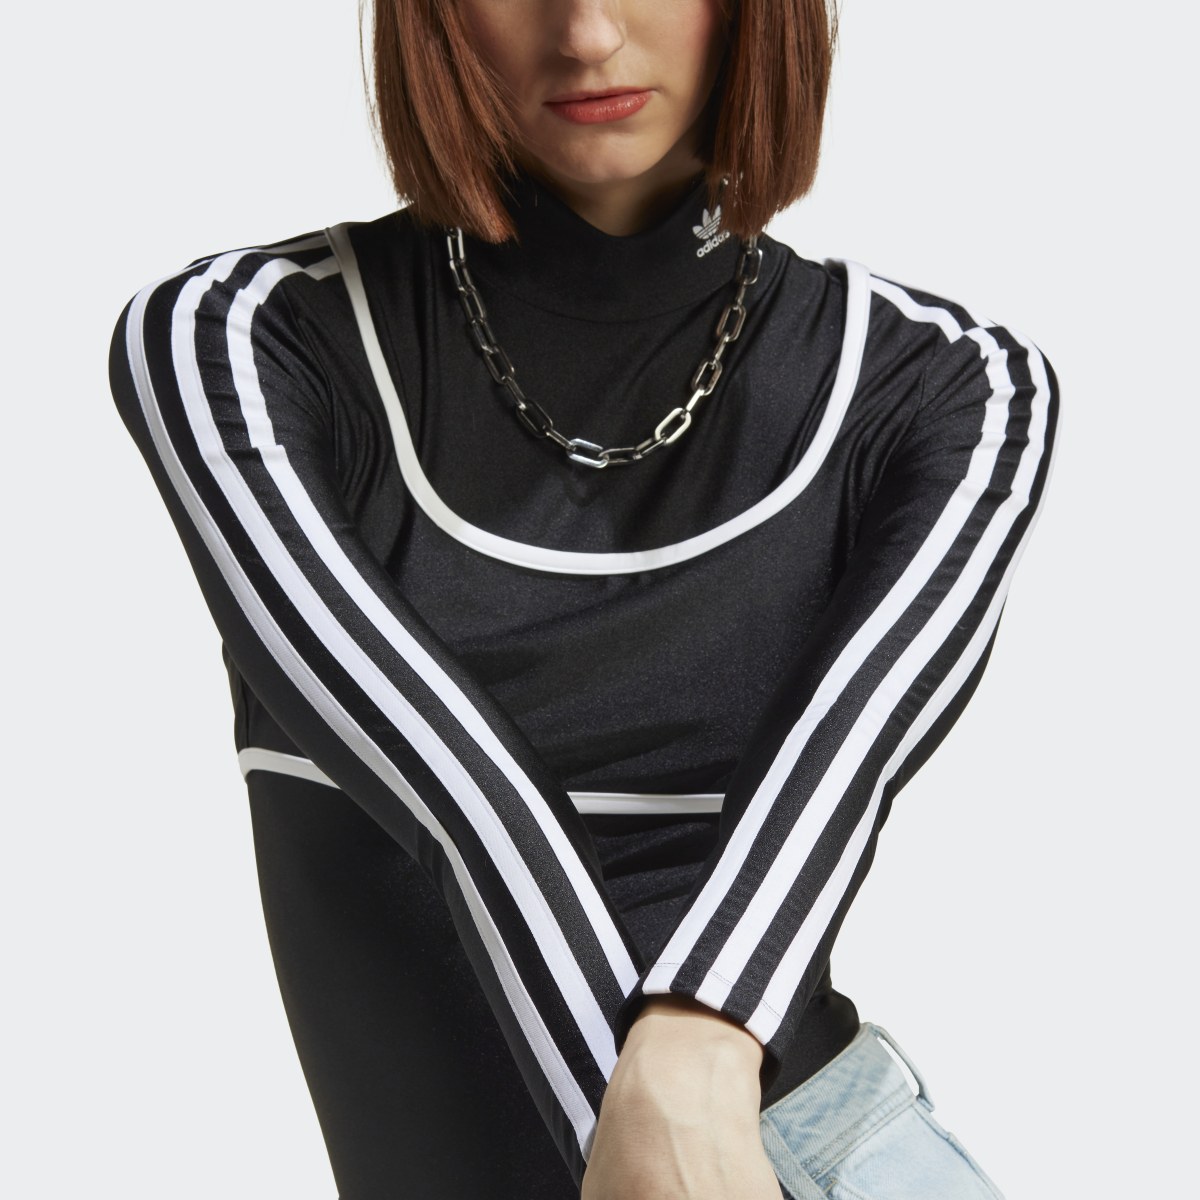 Adidas Long Sleeve Bodysuit. 8